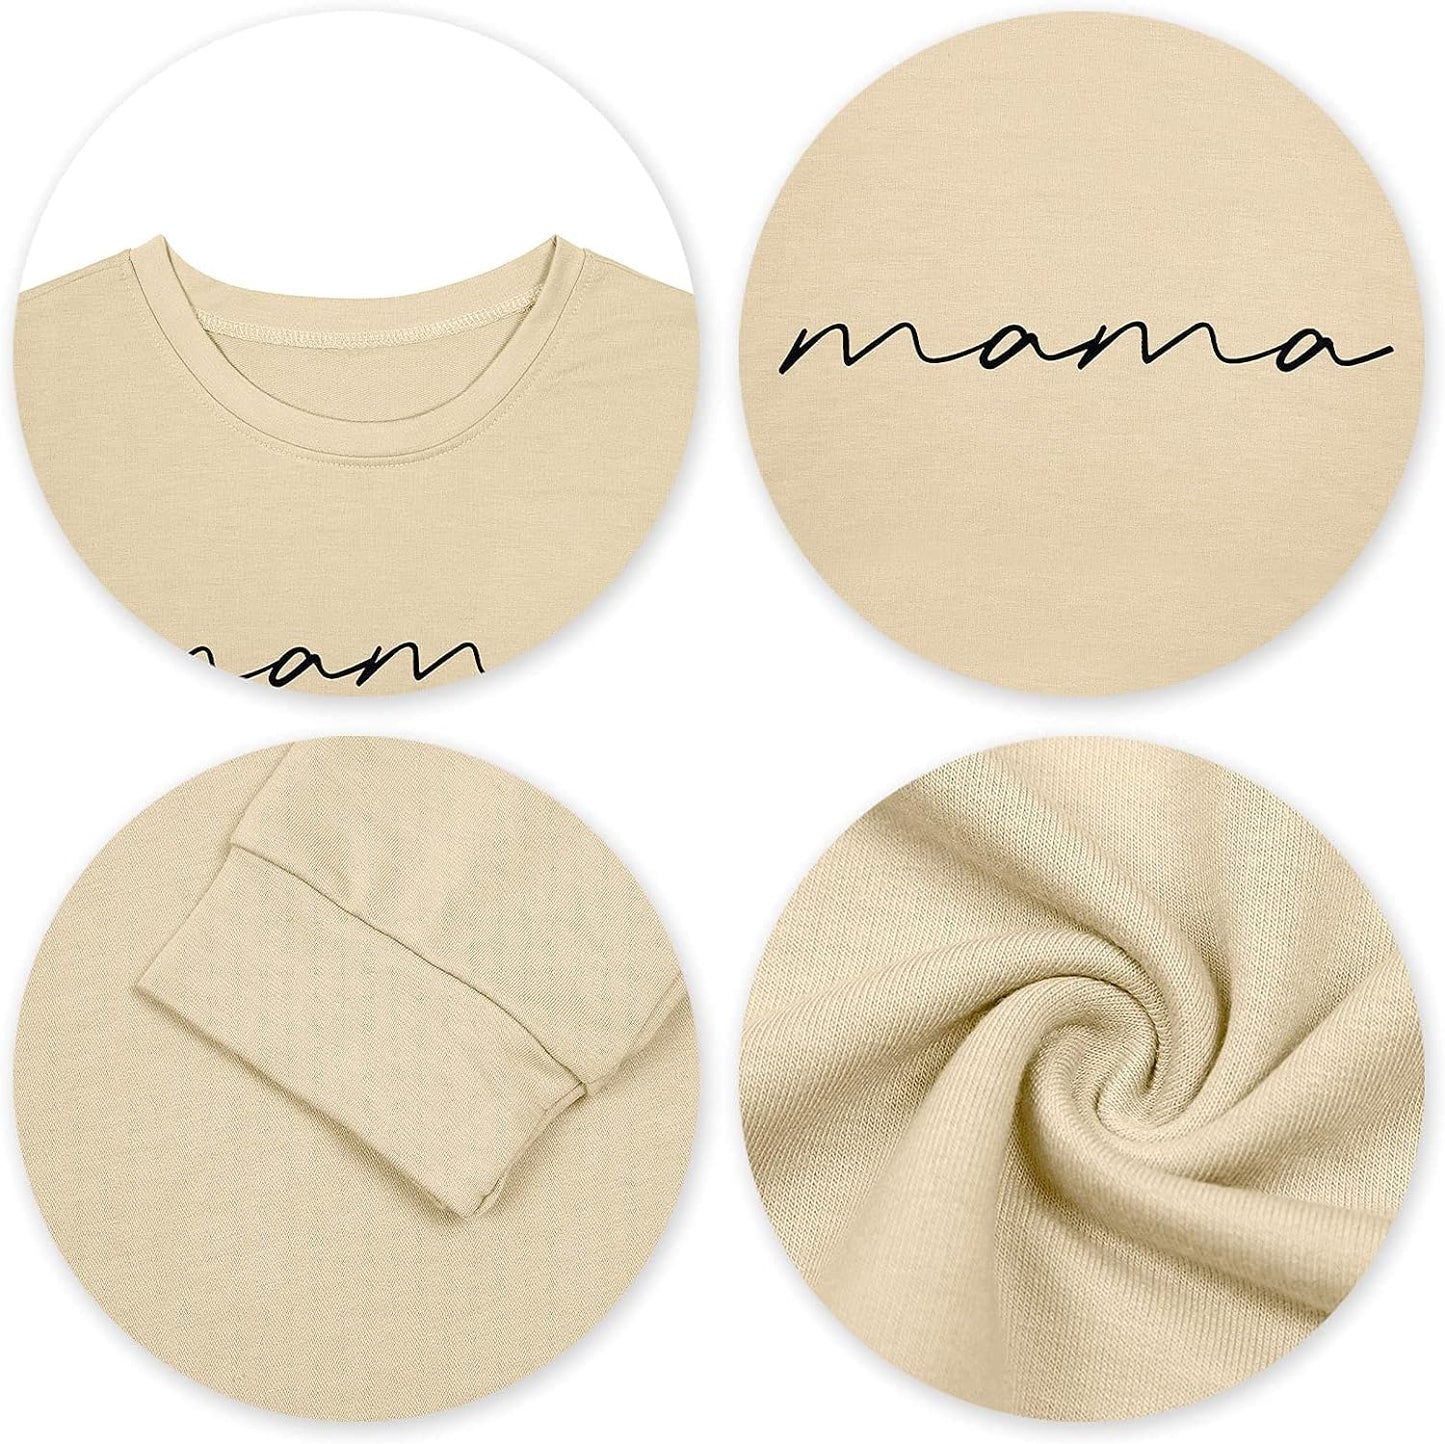 Womens Crewneck Sweatshirt Mama Letter Print Long Sleeve Loose Fashion Pullover Top